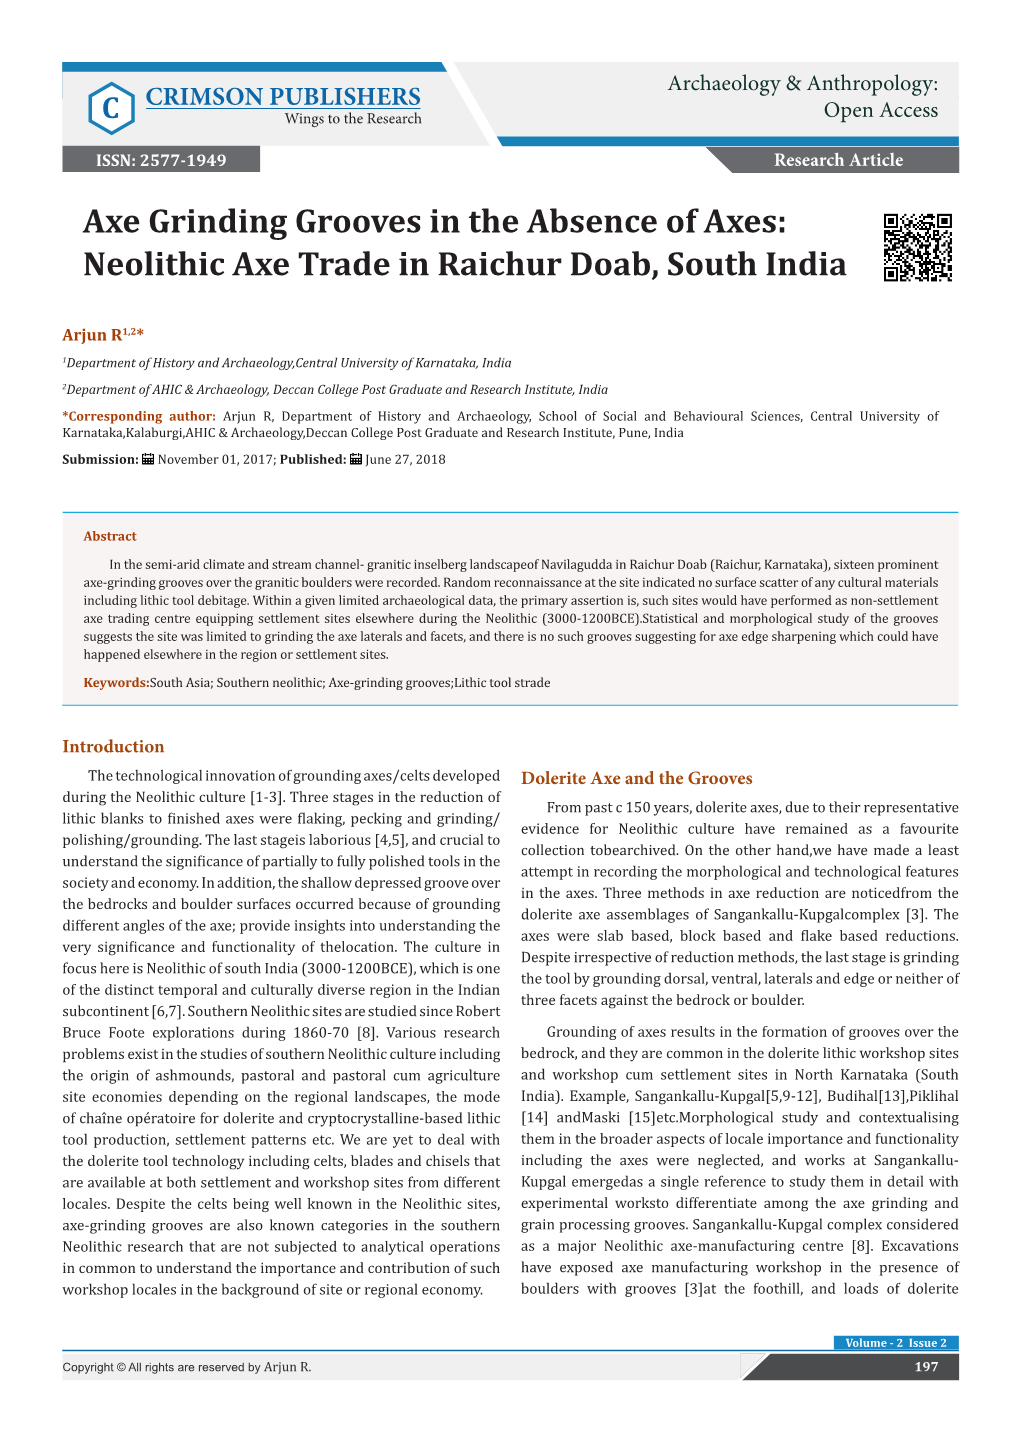 Neolithic Axe Trade in Raichur Doab, South India